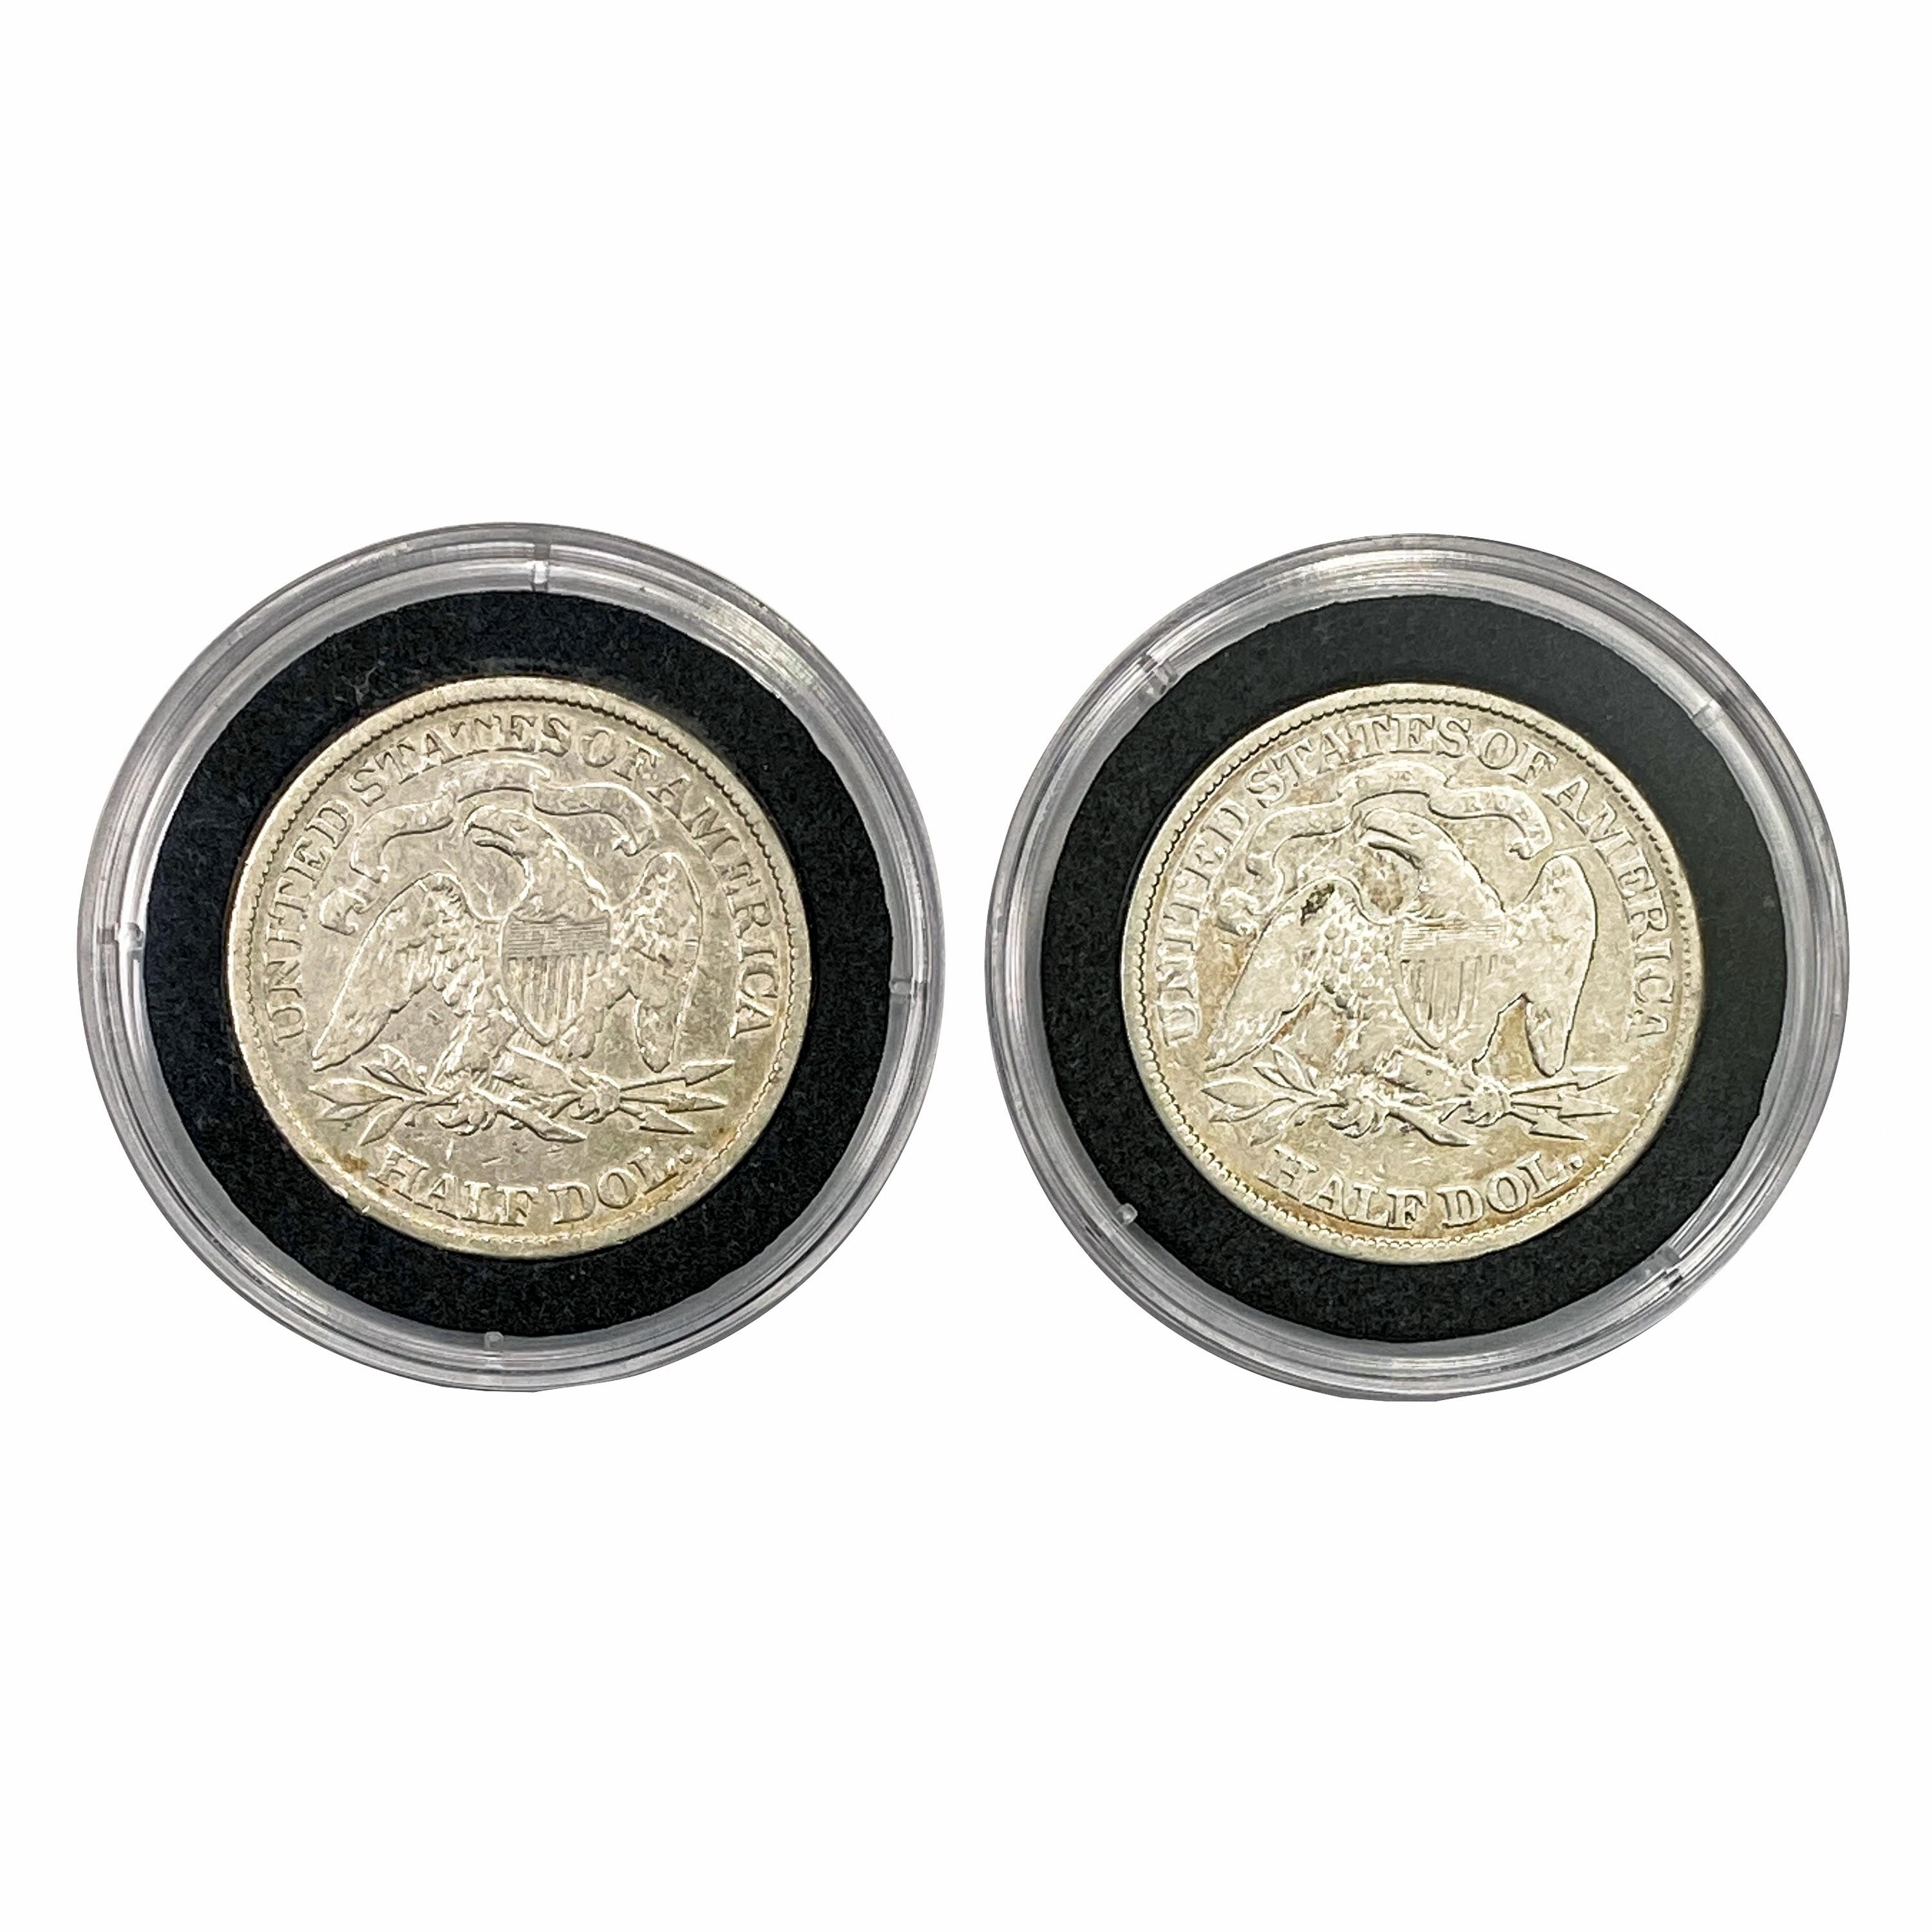 1874, 1877 Pair of Seated Liberty Half Dollars [2